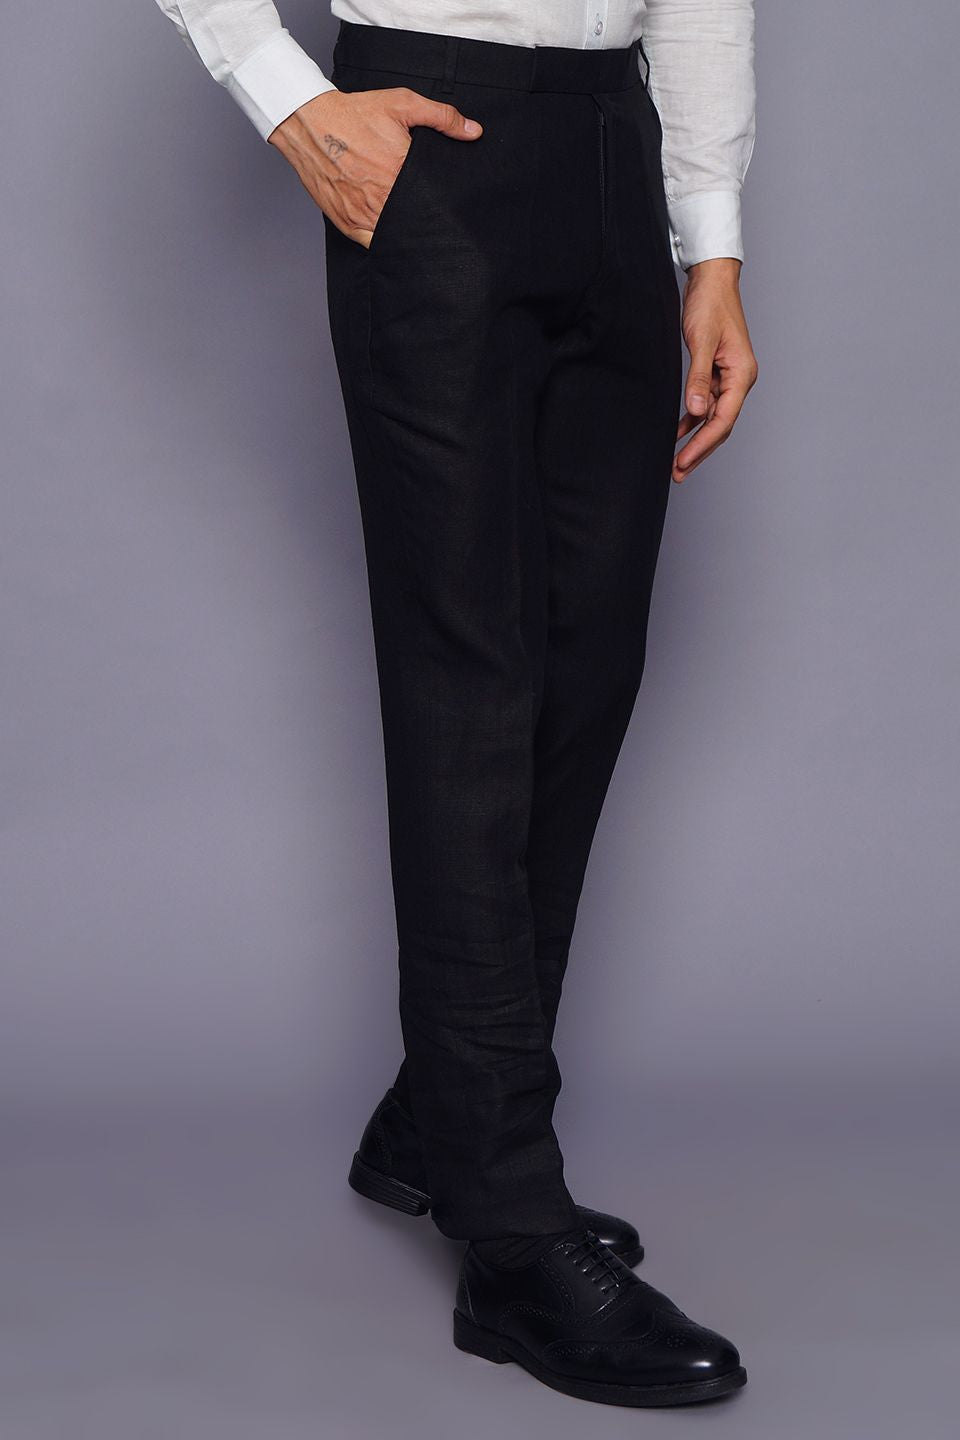 Wintage Men's Black Regular Fit Pant 100% Linen 